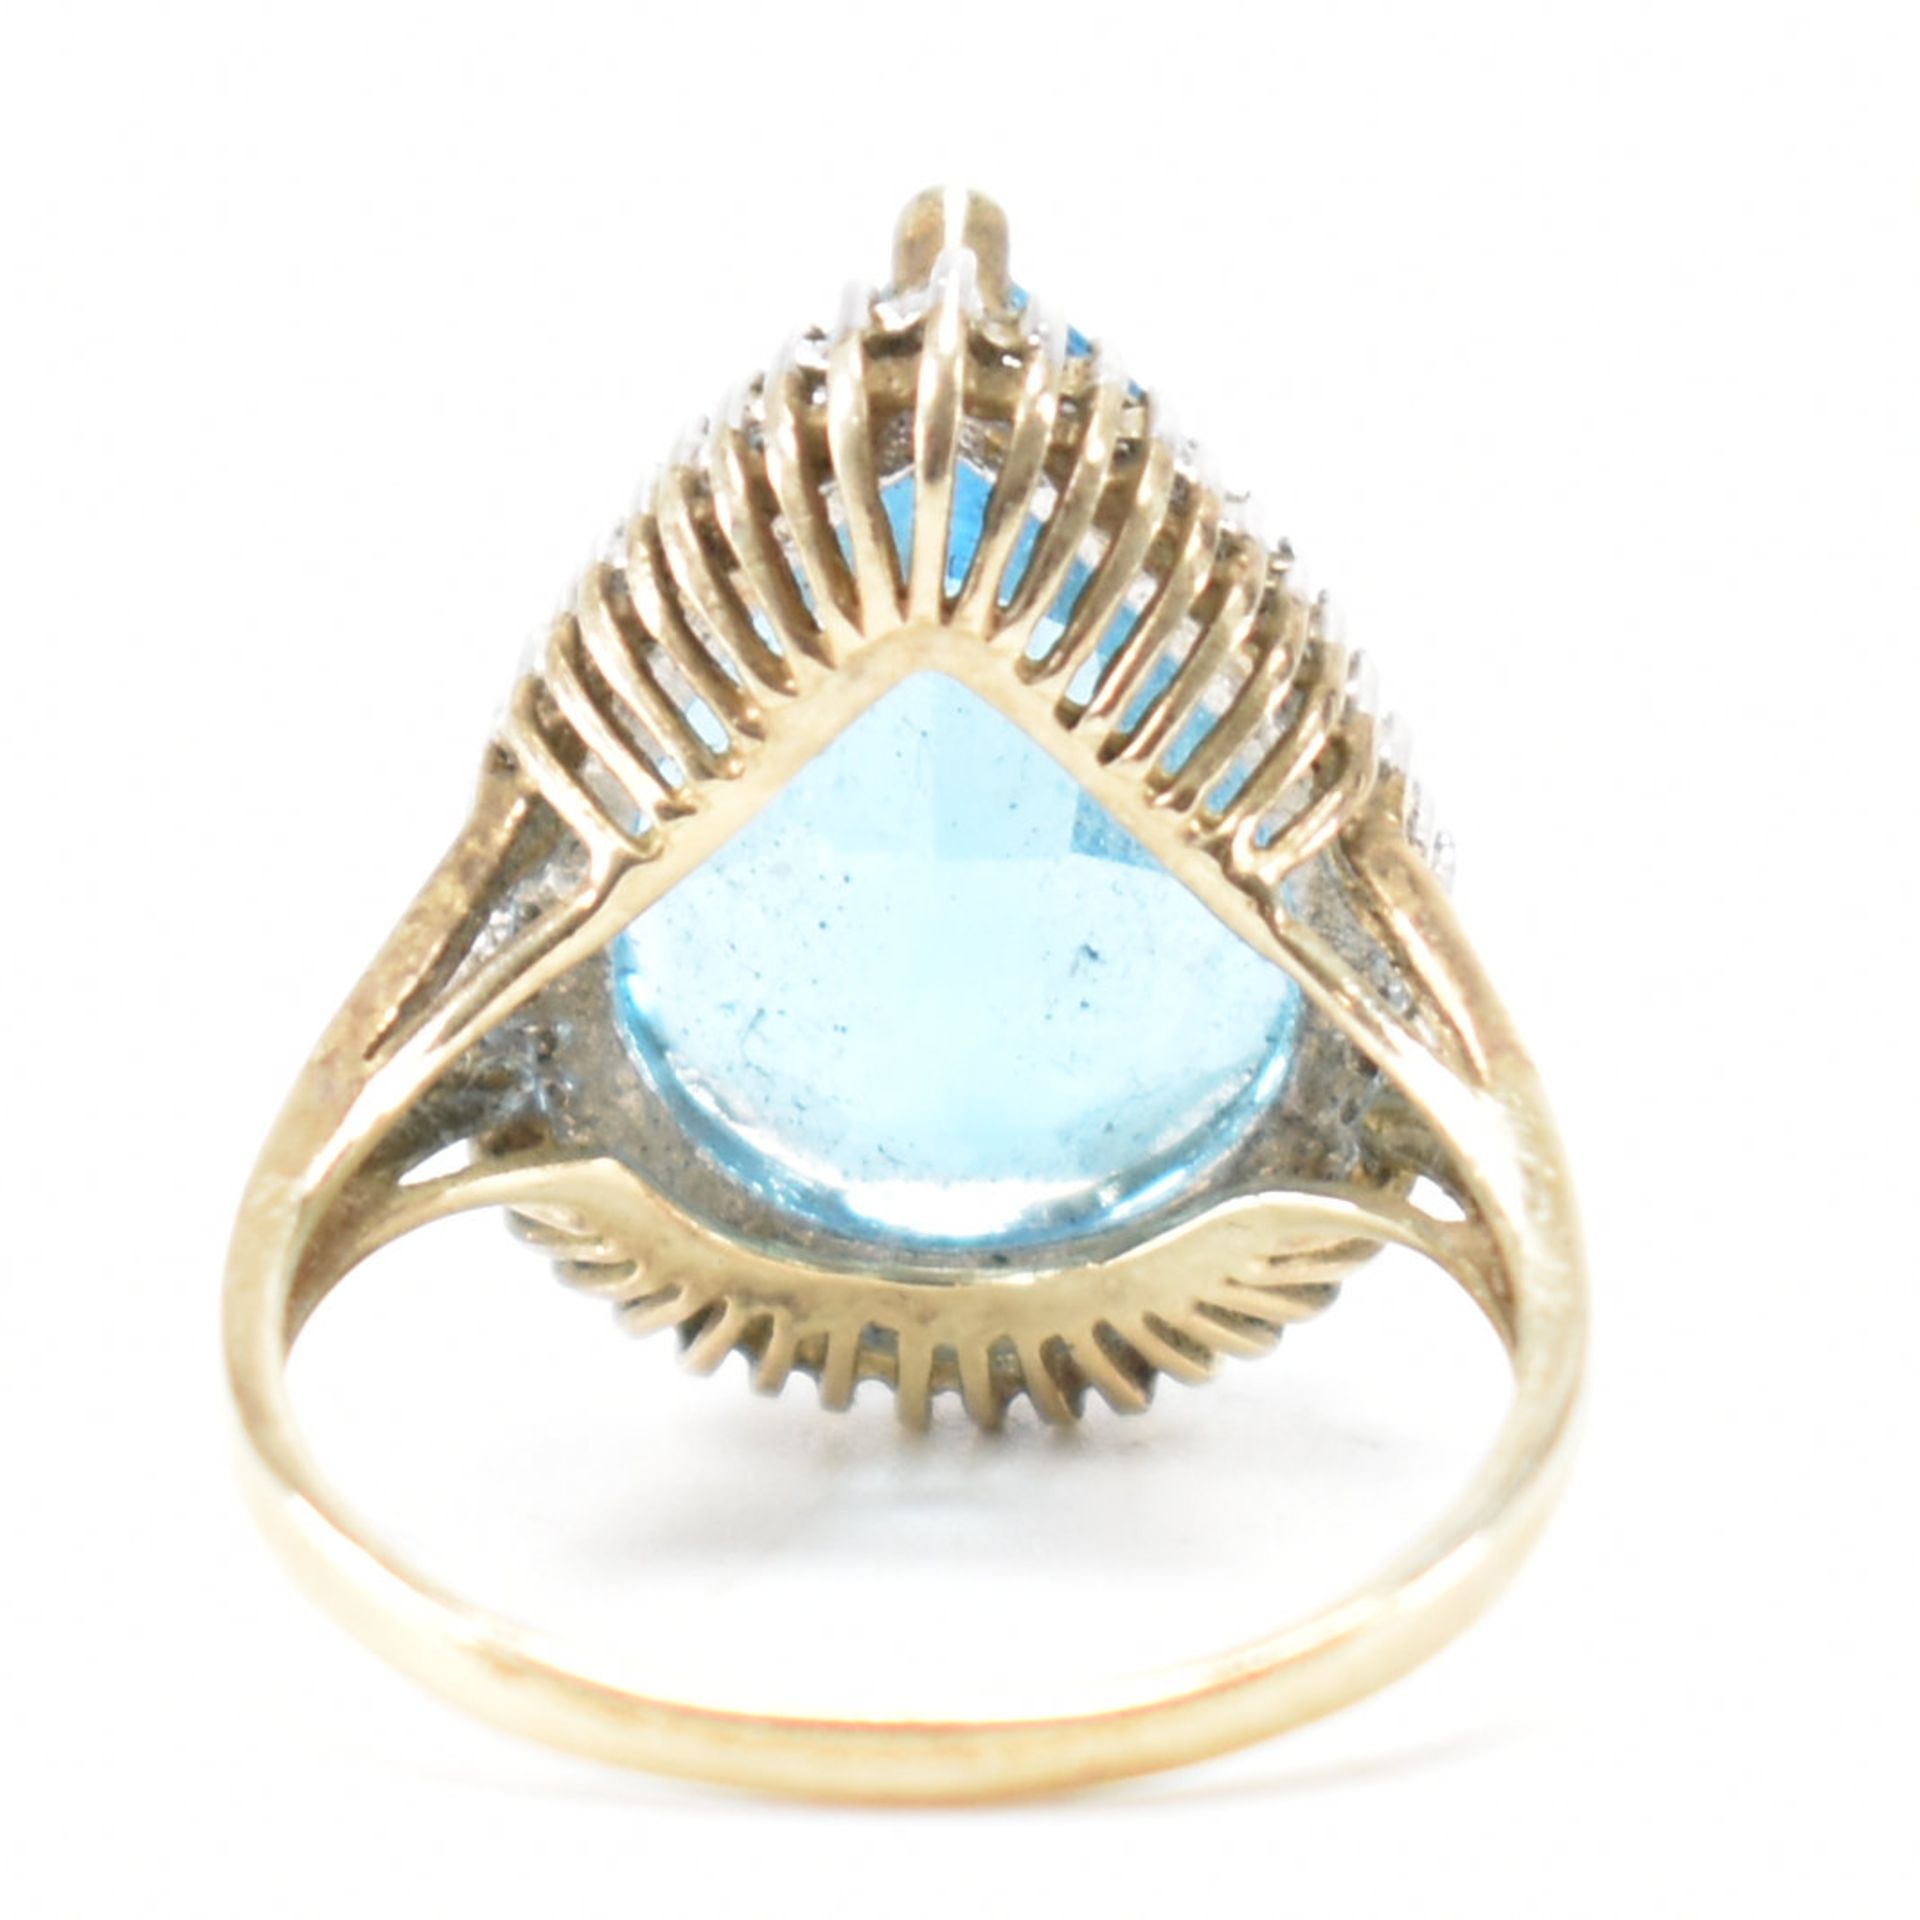 HALLMARKED 9CT GOLD BLUE STONE & DIAMOND HALO RING - Image 3 of 9